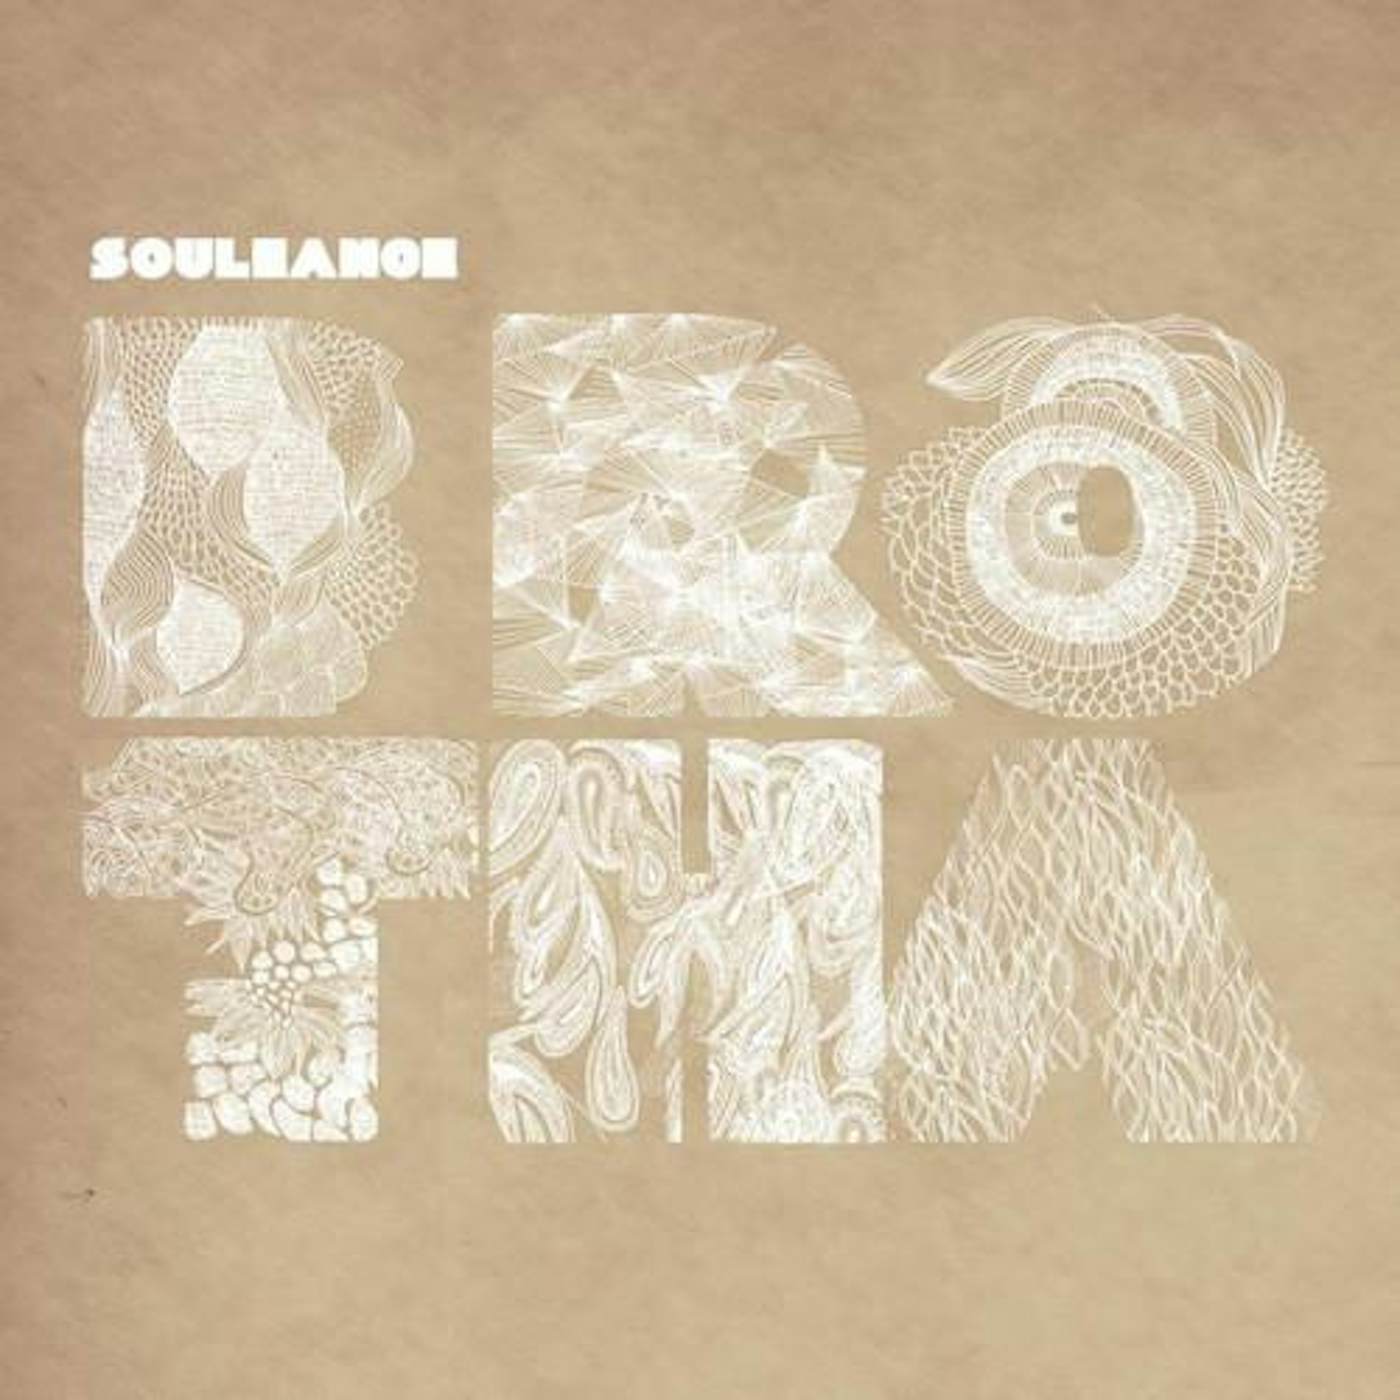 Souleance BROTHA EP Vinyl Record - UK Release